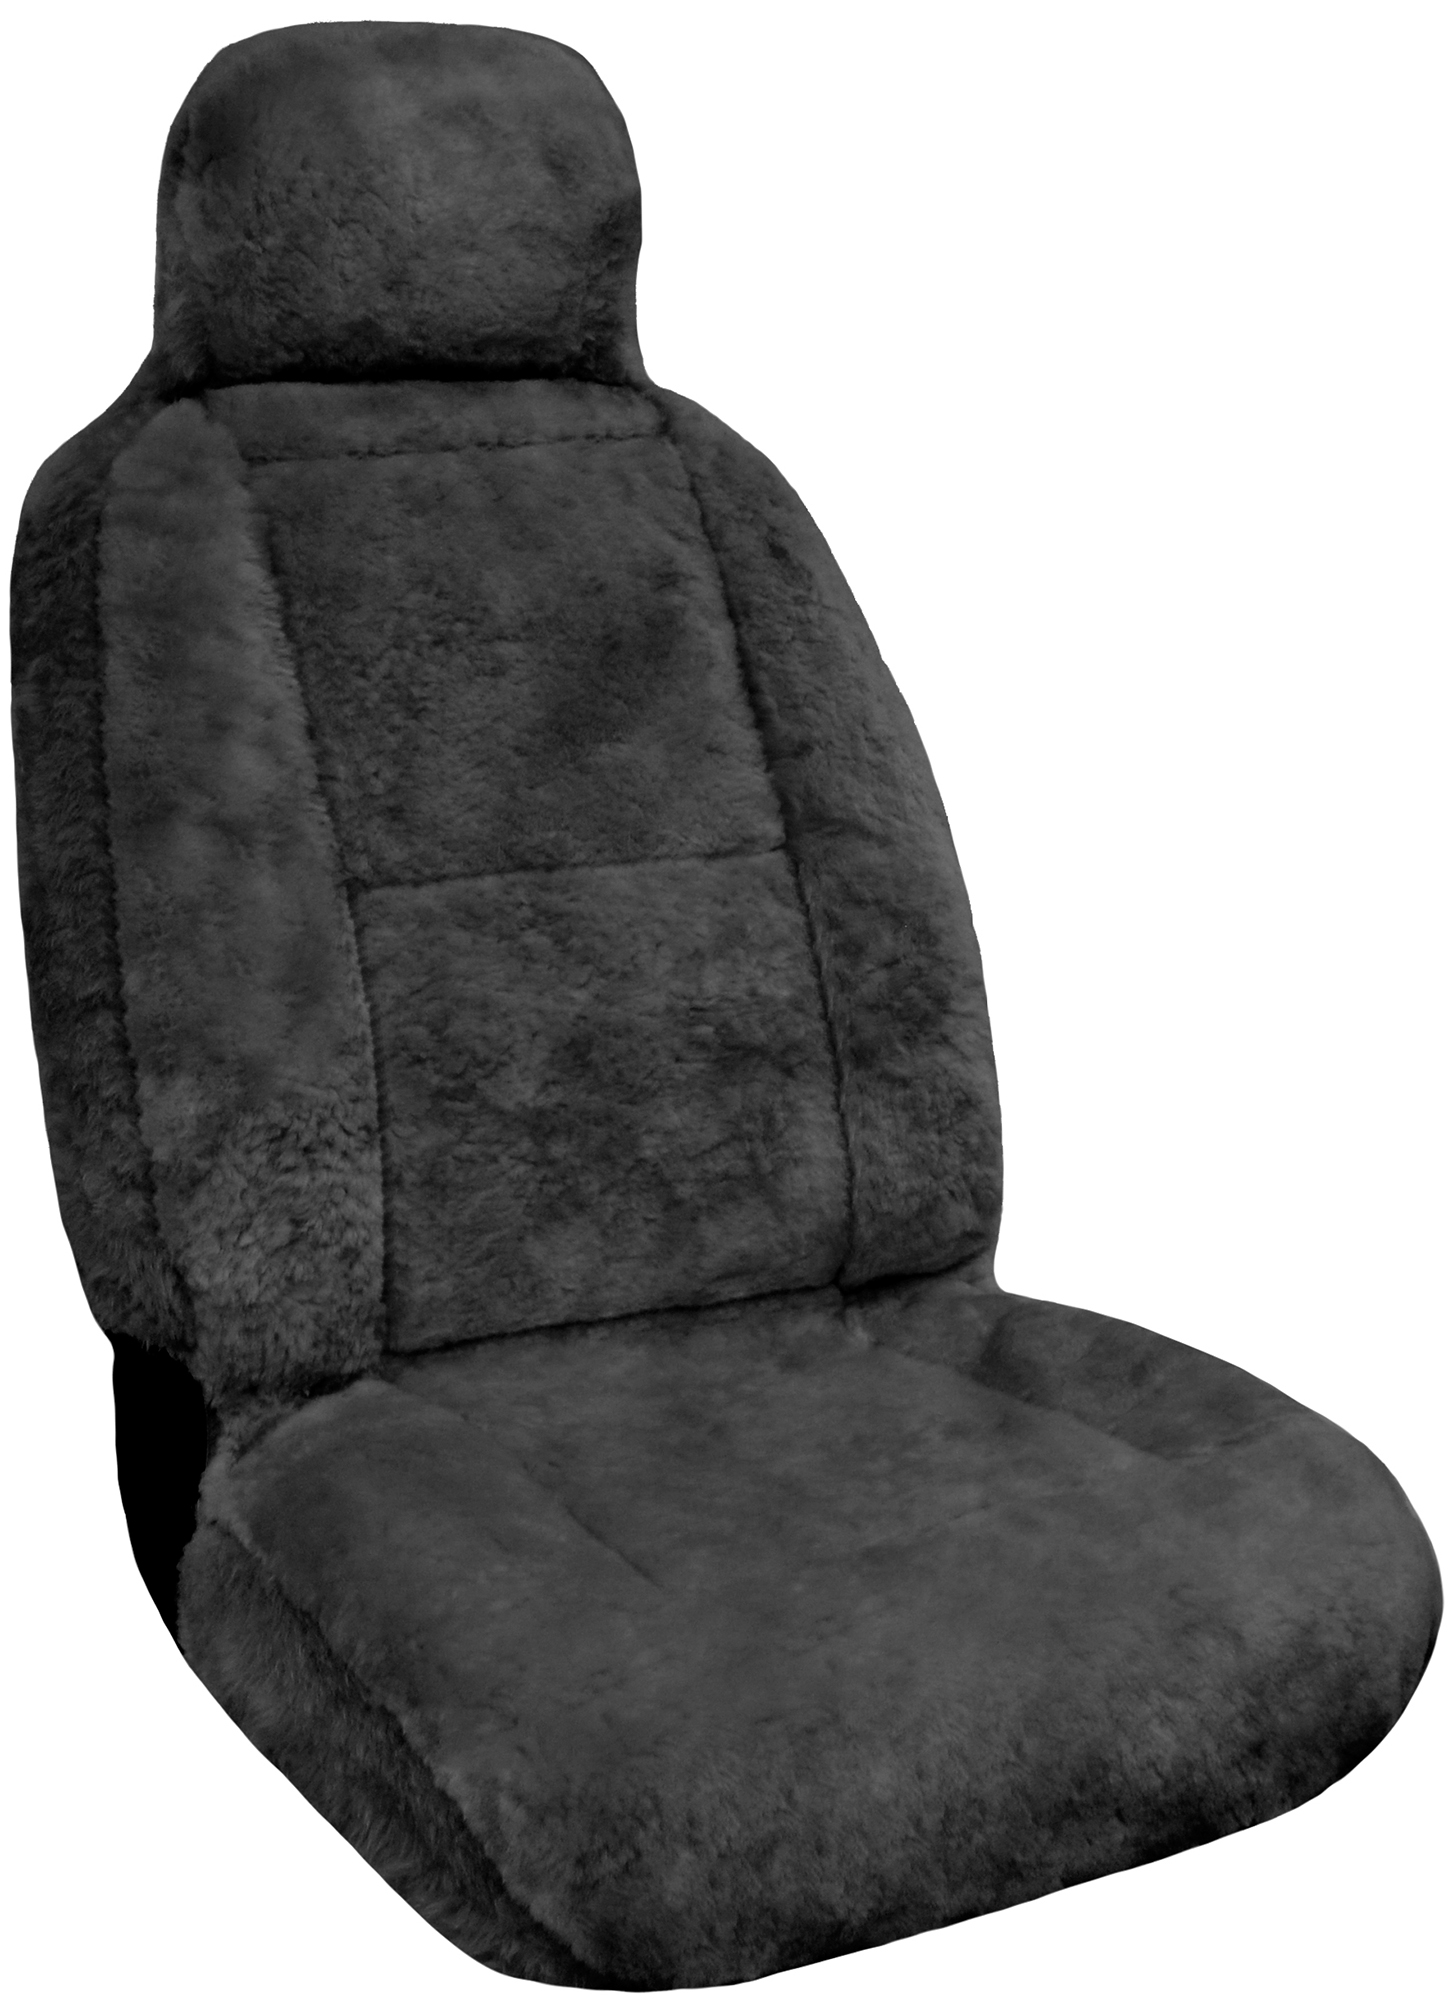 Eurow Sheepskin Seat Cover New XL Design Premium Pelt - Gray - image 1 of 6